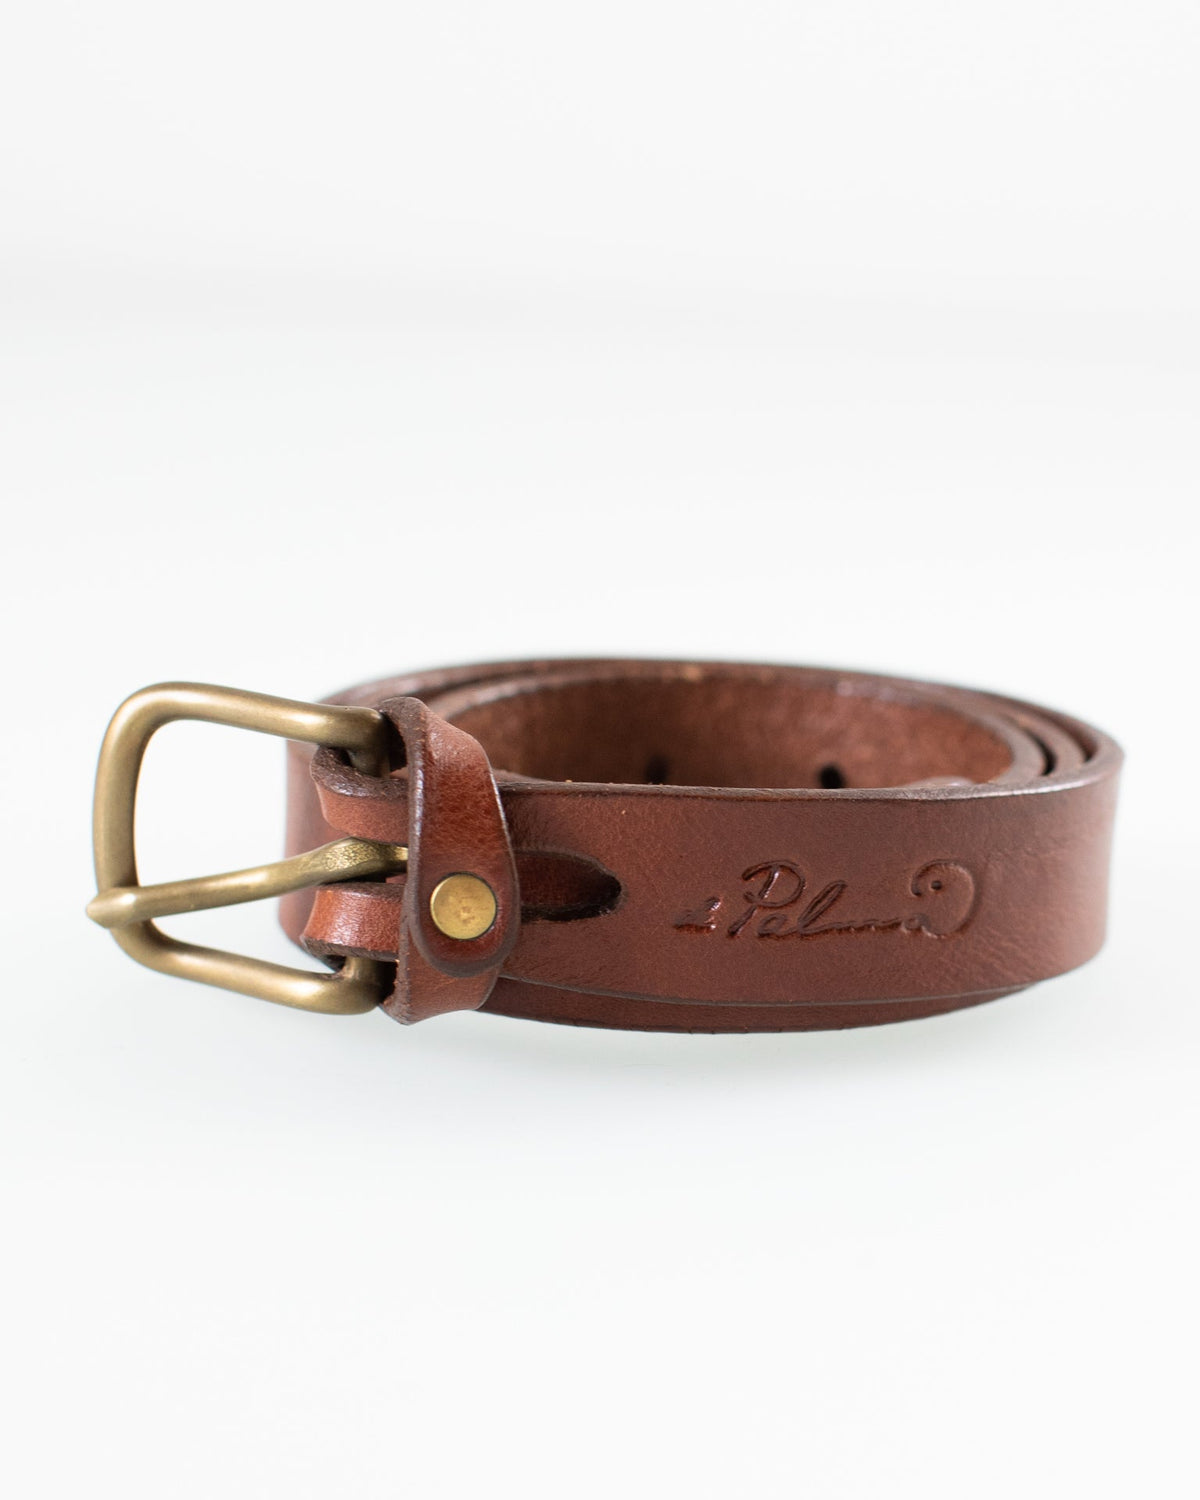 Depalma Handsewn Accessories 1 inch Mon Senor Belt in Bark w/ Brass